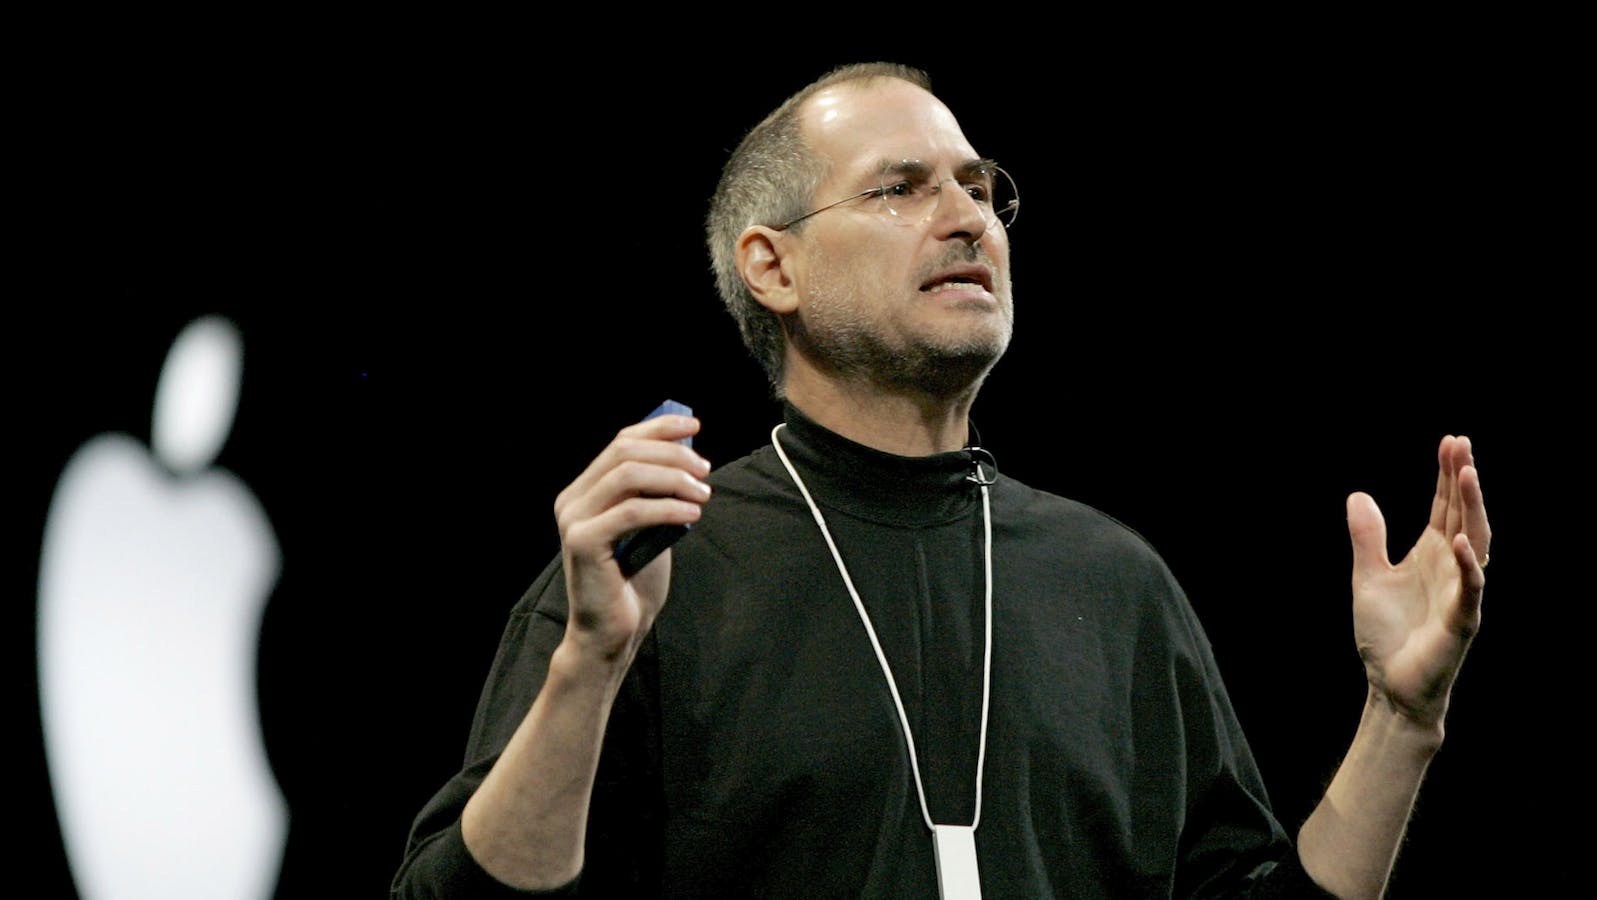 Apple co-founder Steve Jobs. Photo by Bloomberg.